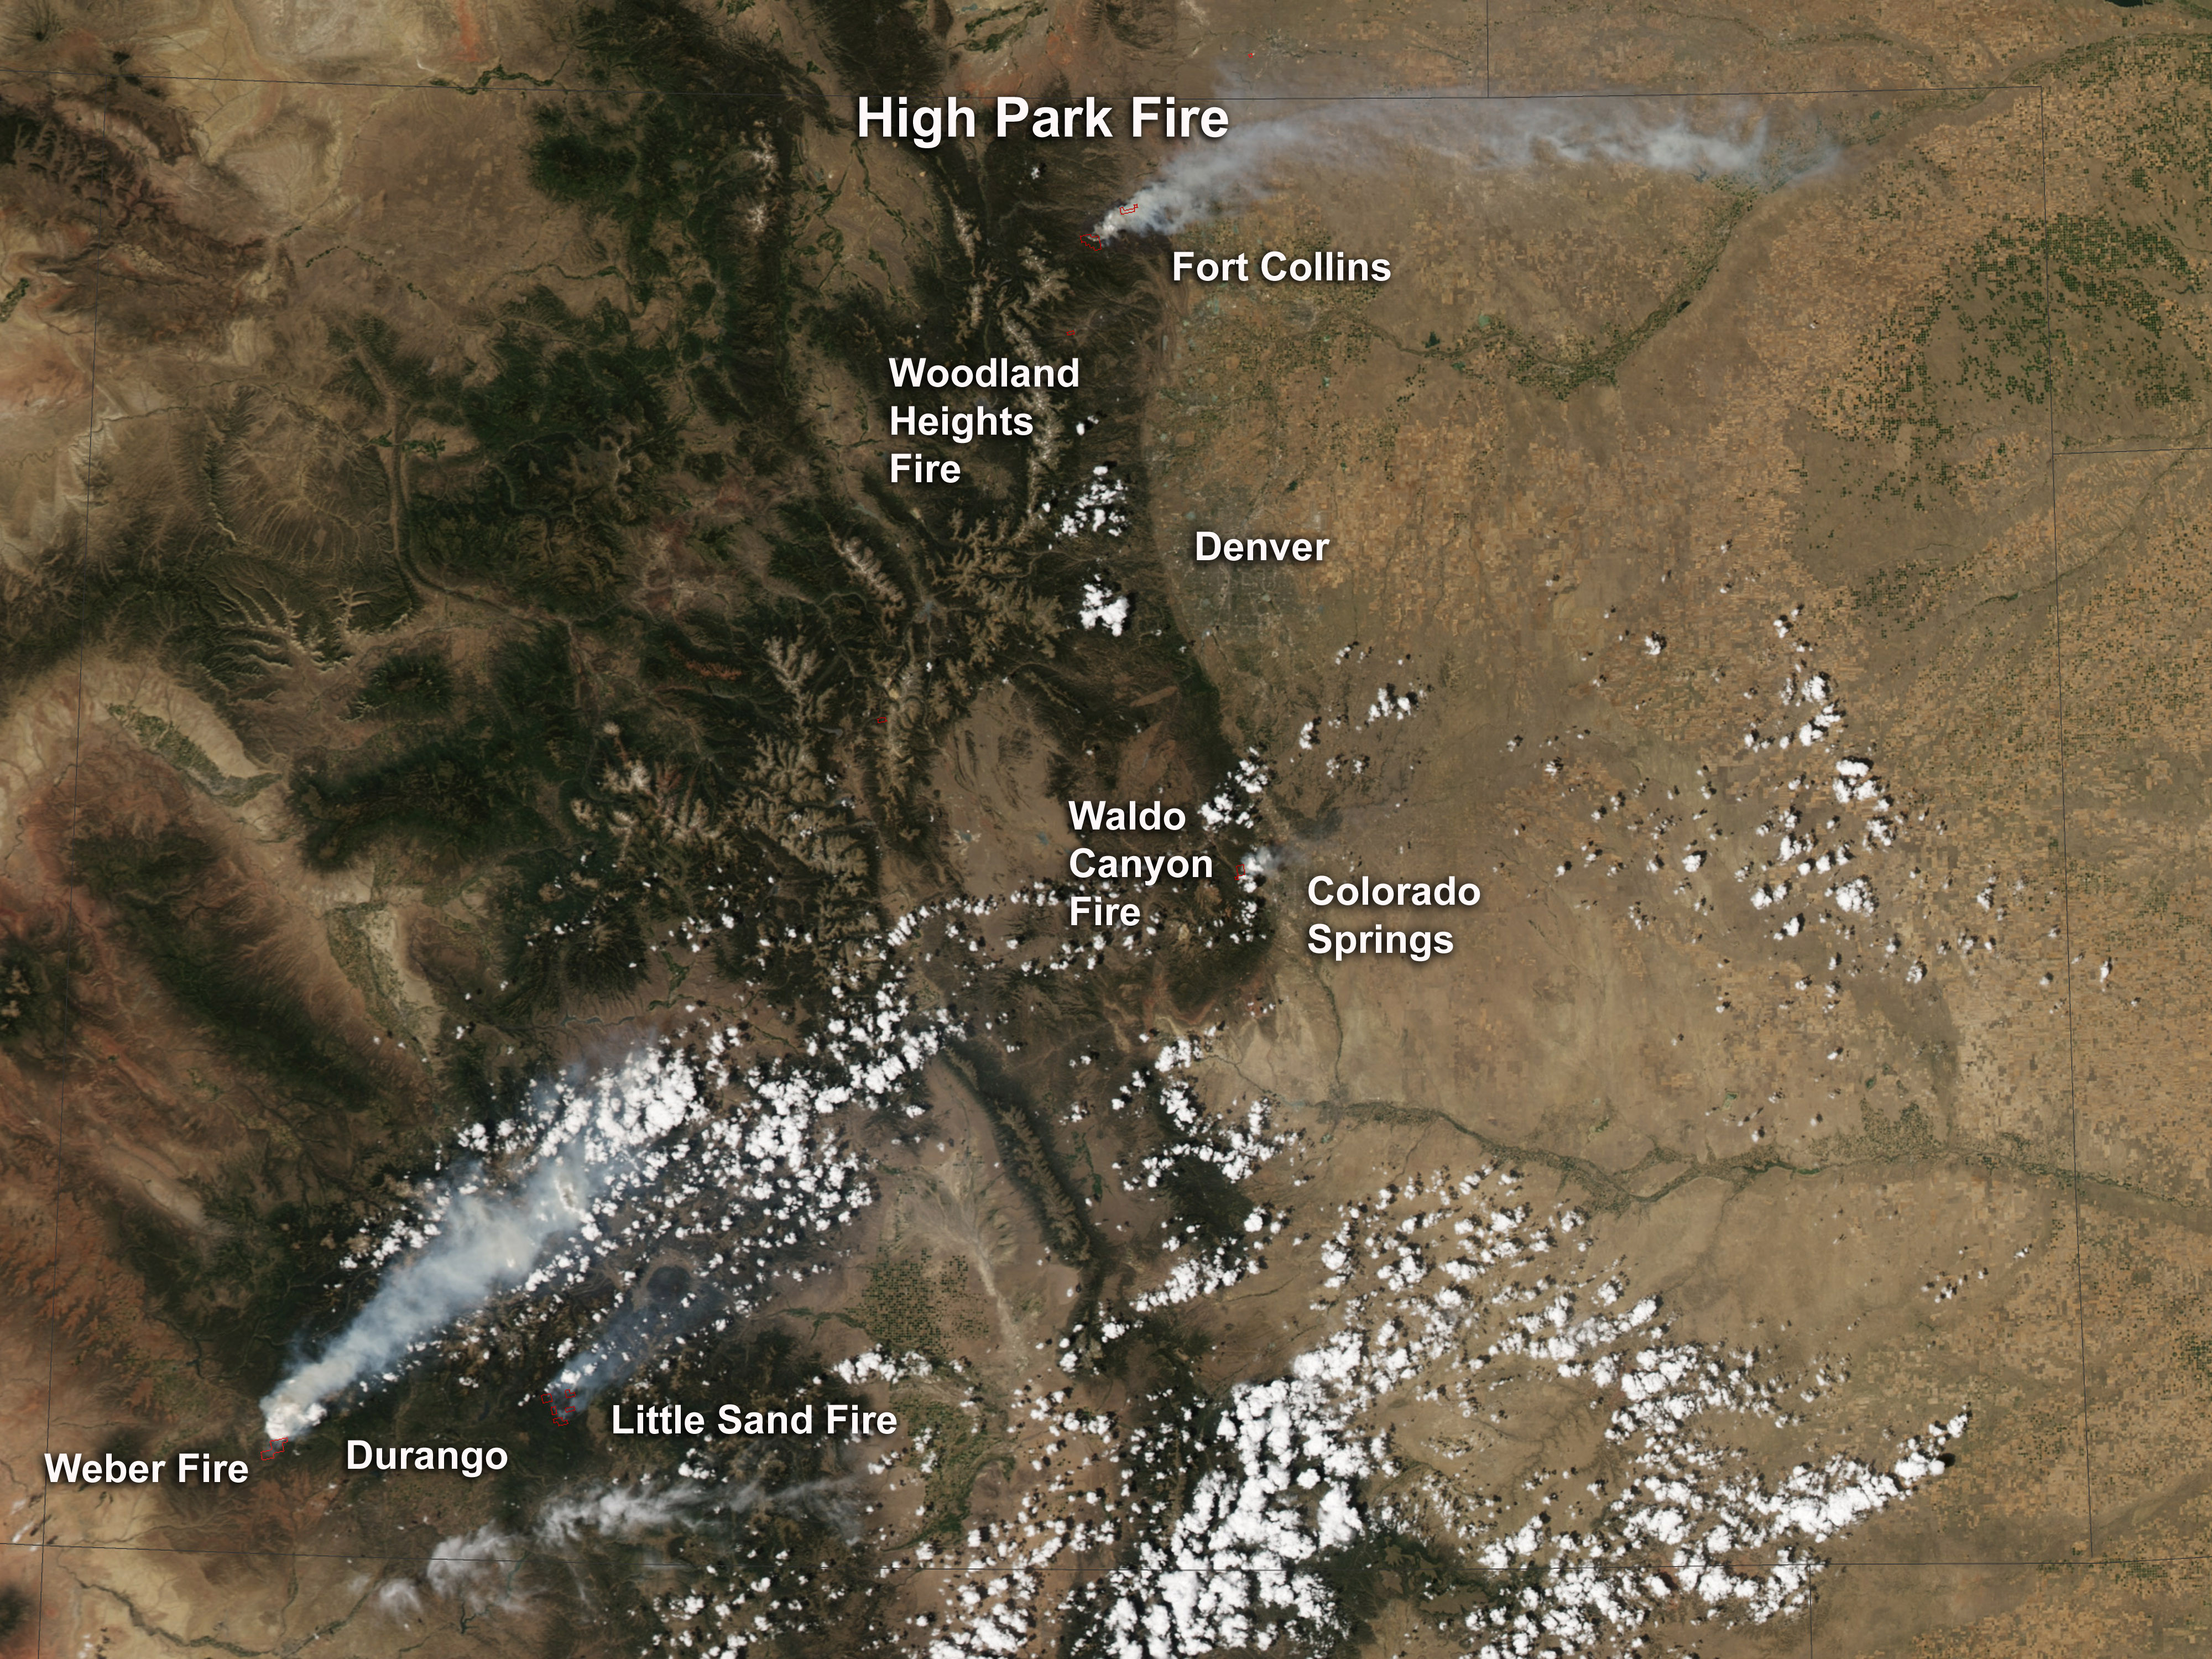 Colorado Wildfires 2012 Nasa Satellite Captures Image Of Multiple